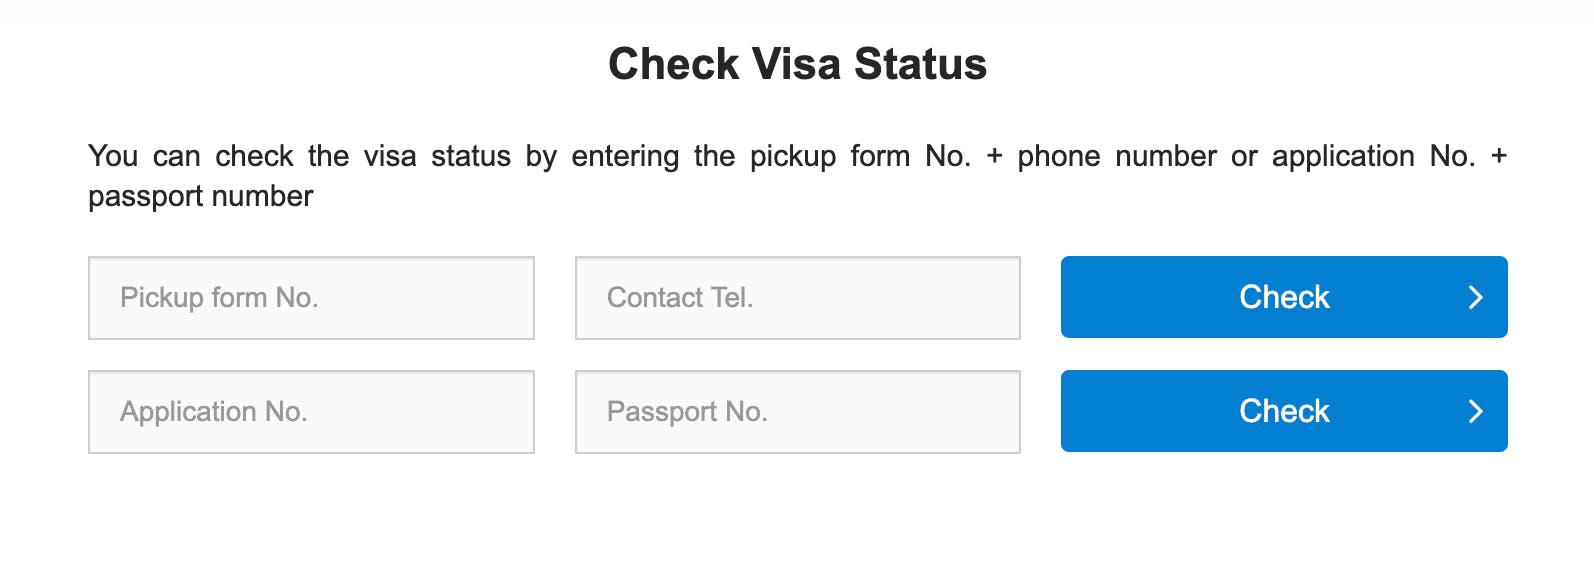 Check your visa status on the China visa application portal